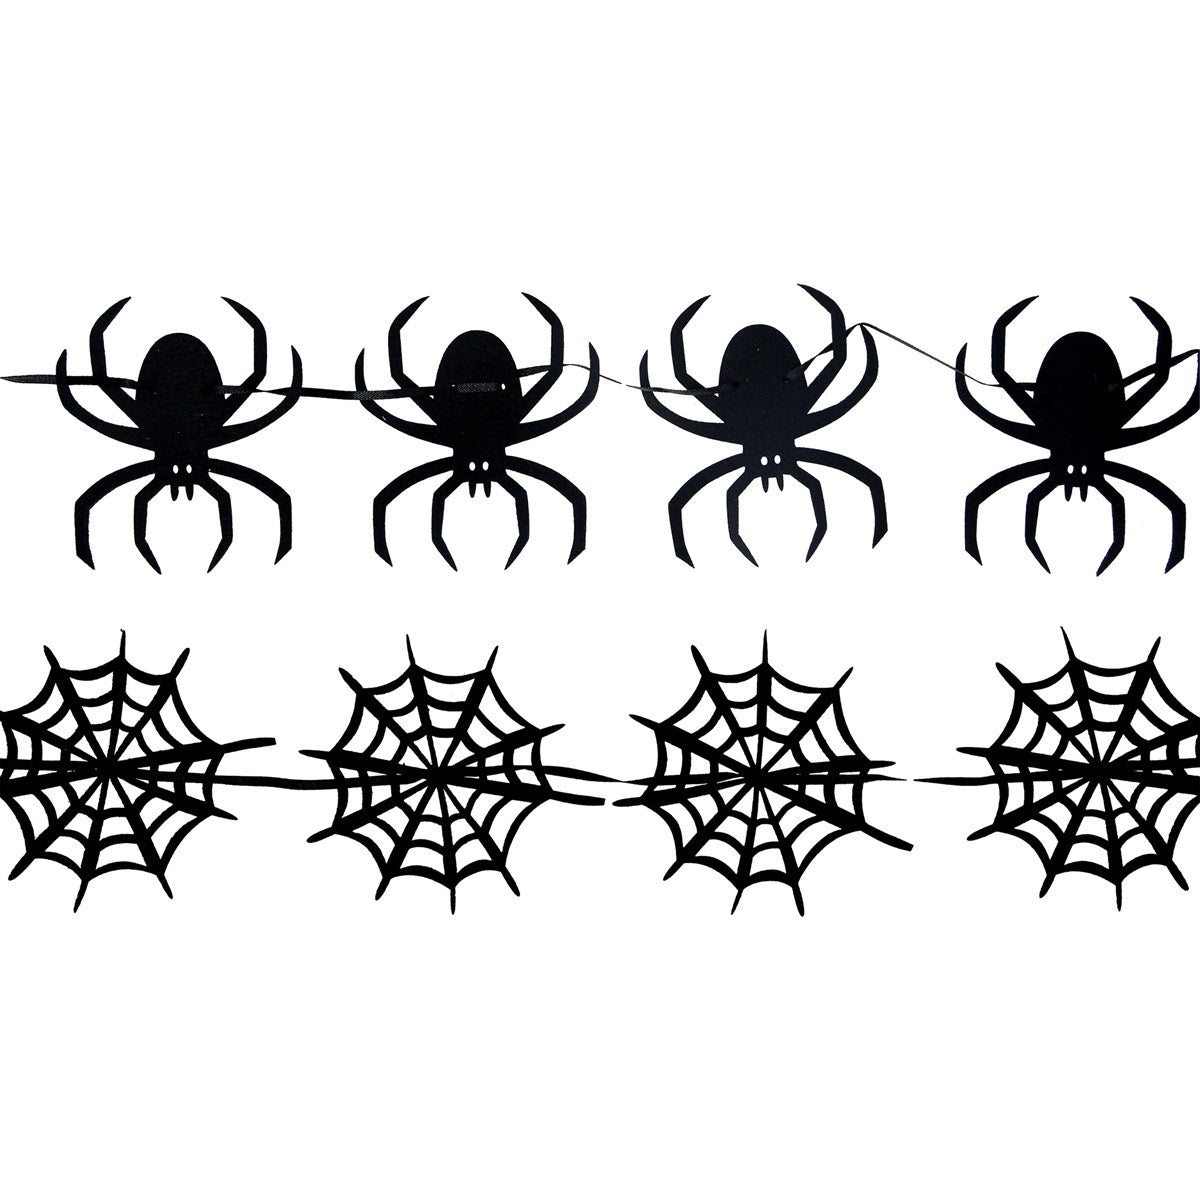 Spooky spider or web Halloween garland